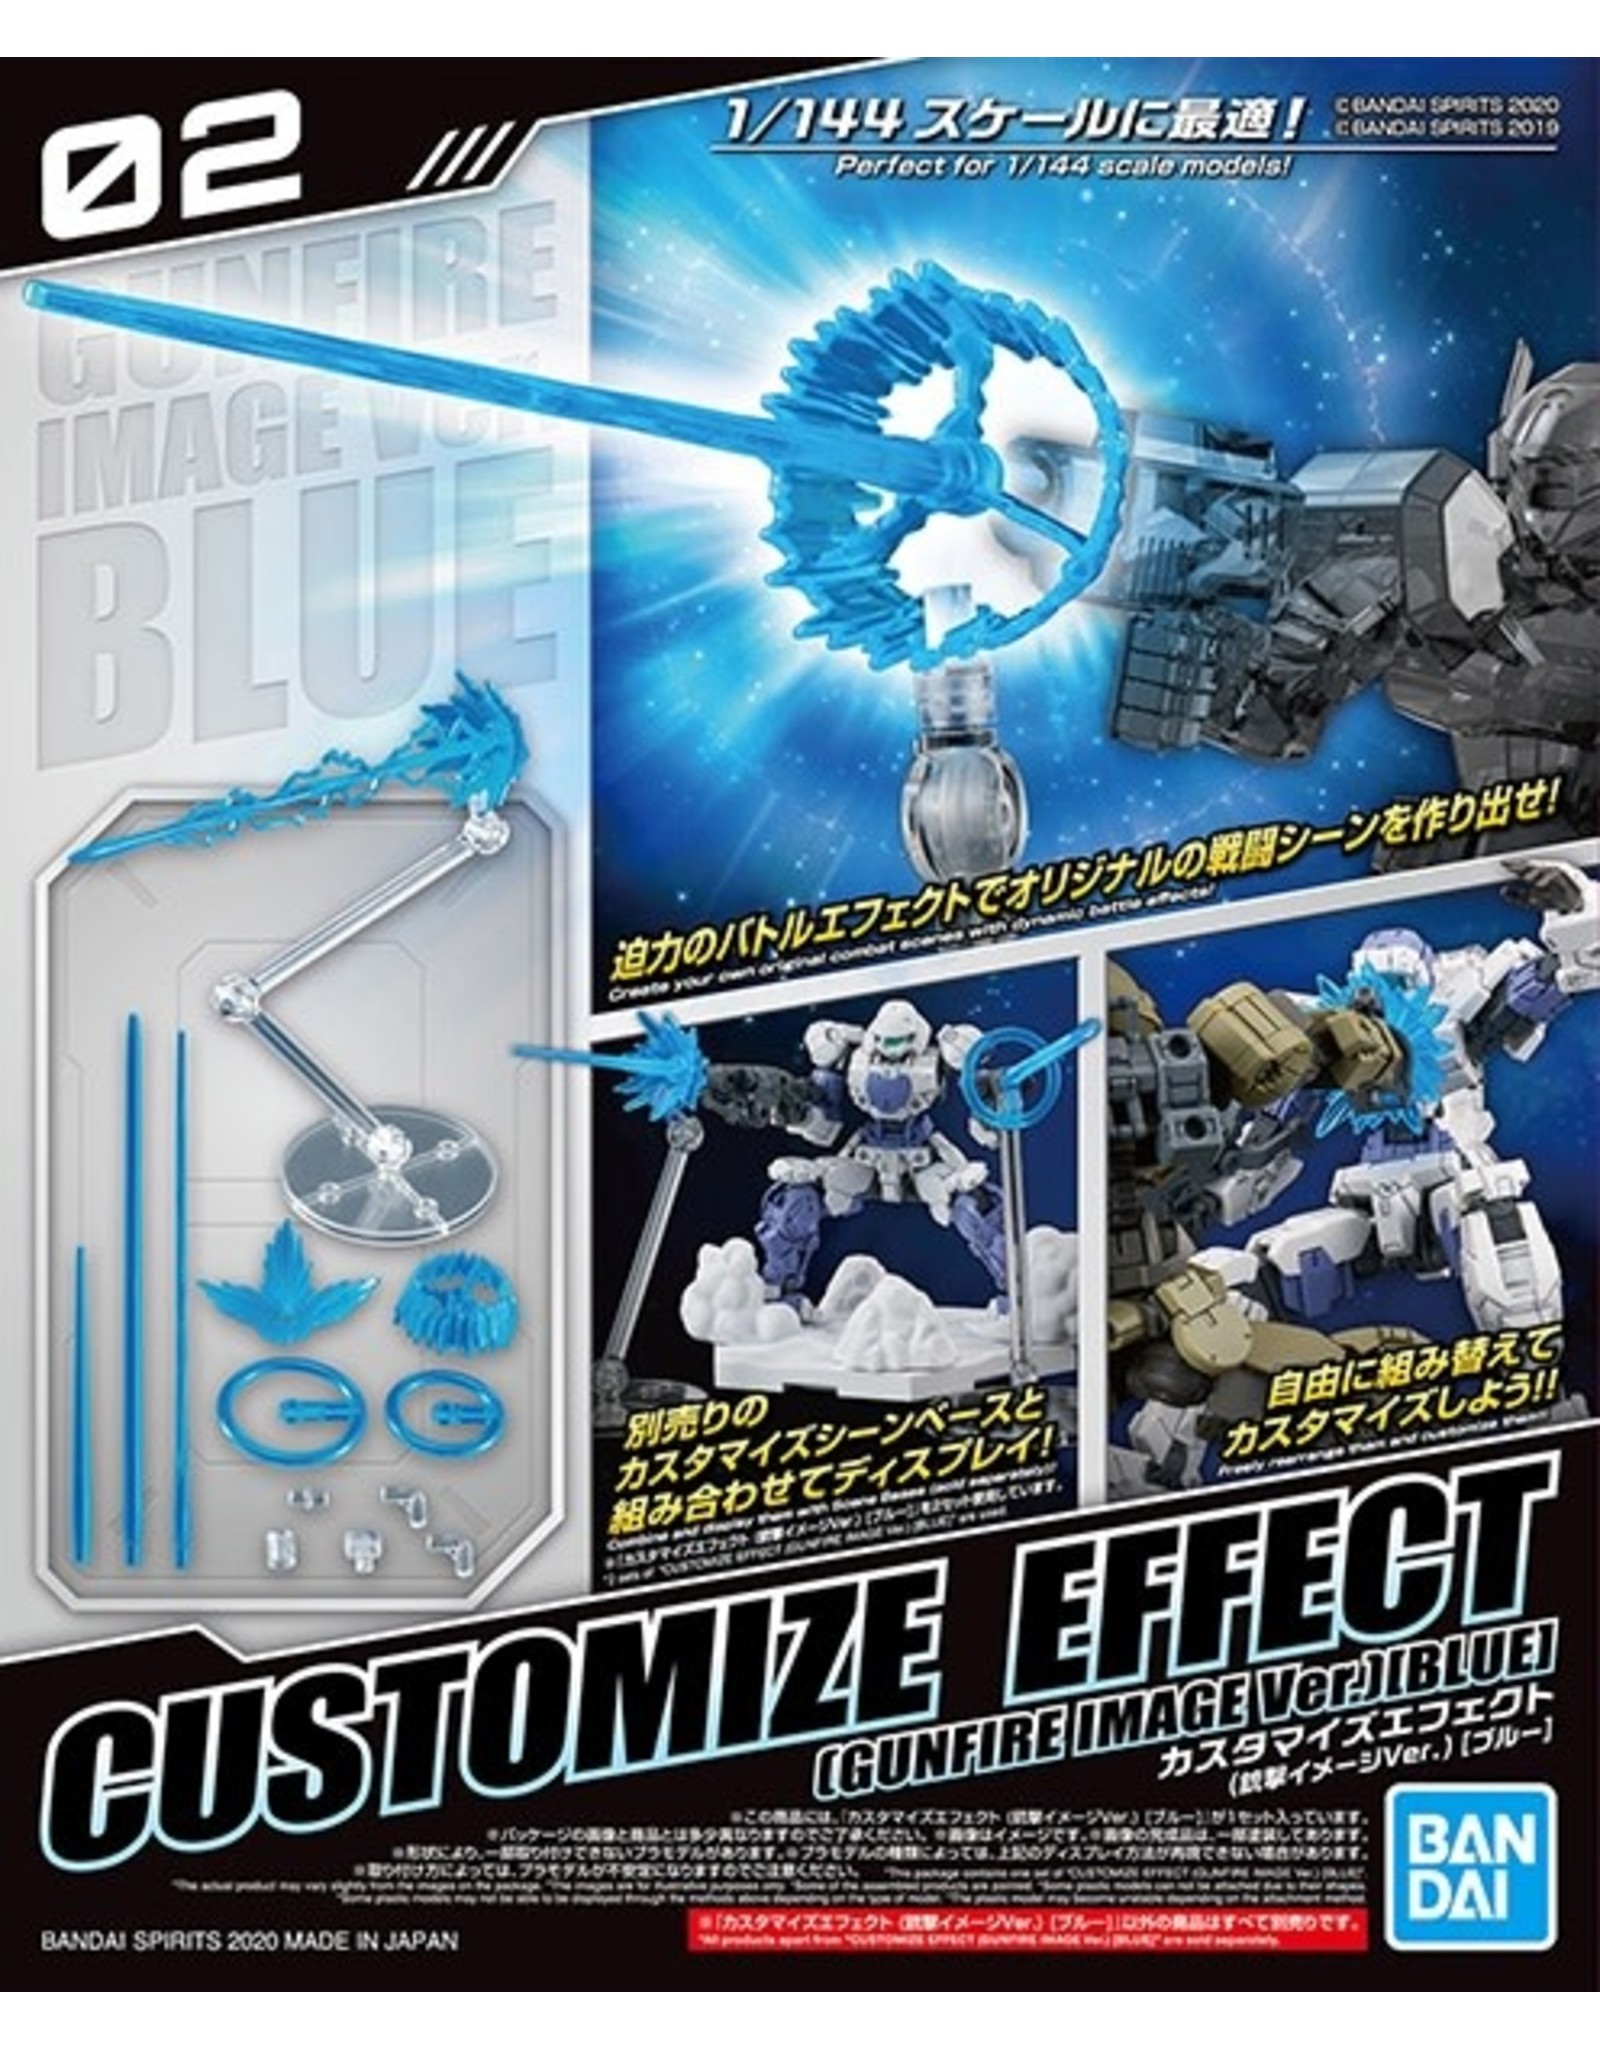 Bandai GUNDAM Customize Effect - Gunfire Image Ver. Blue